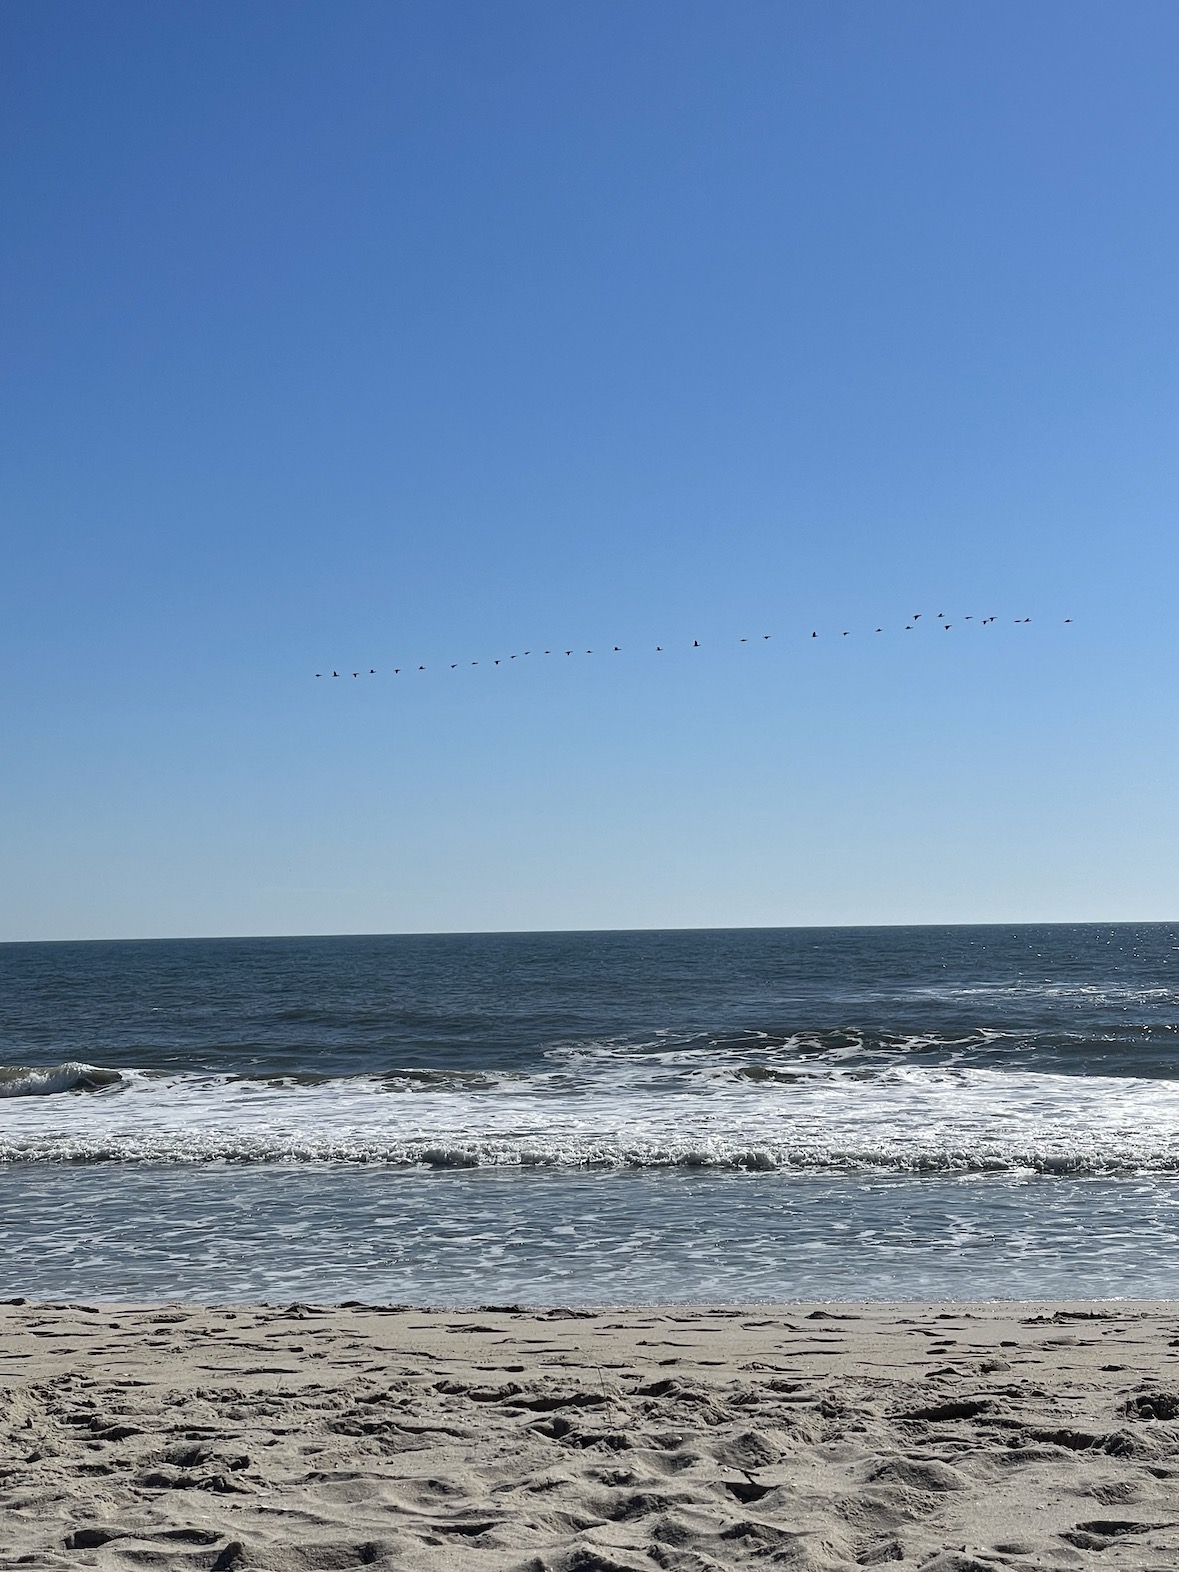 A flock of birds flying over the beach